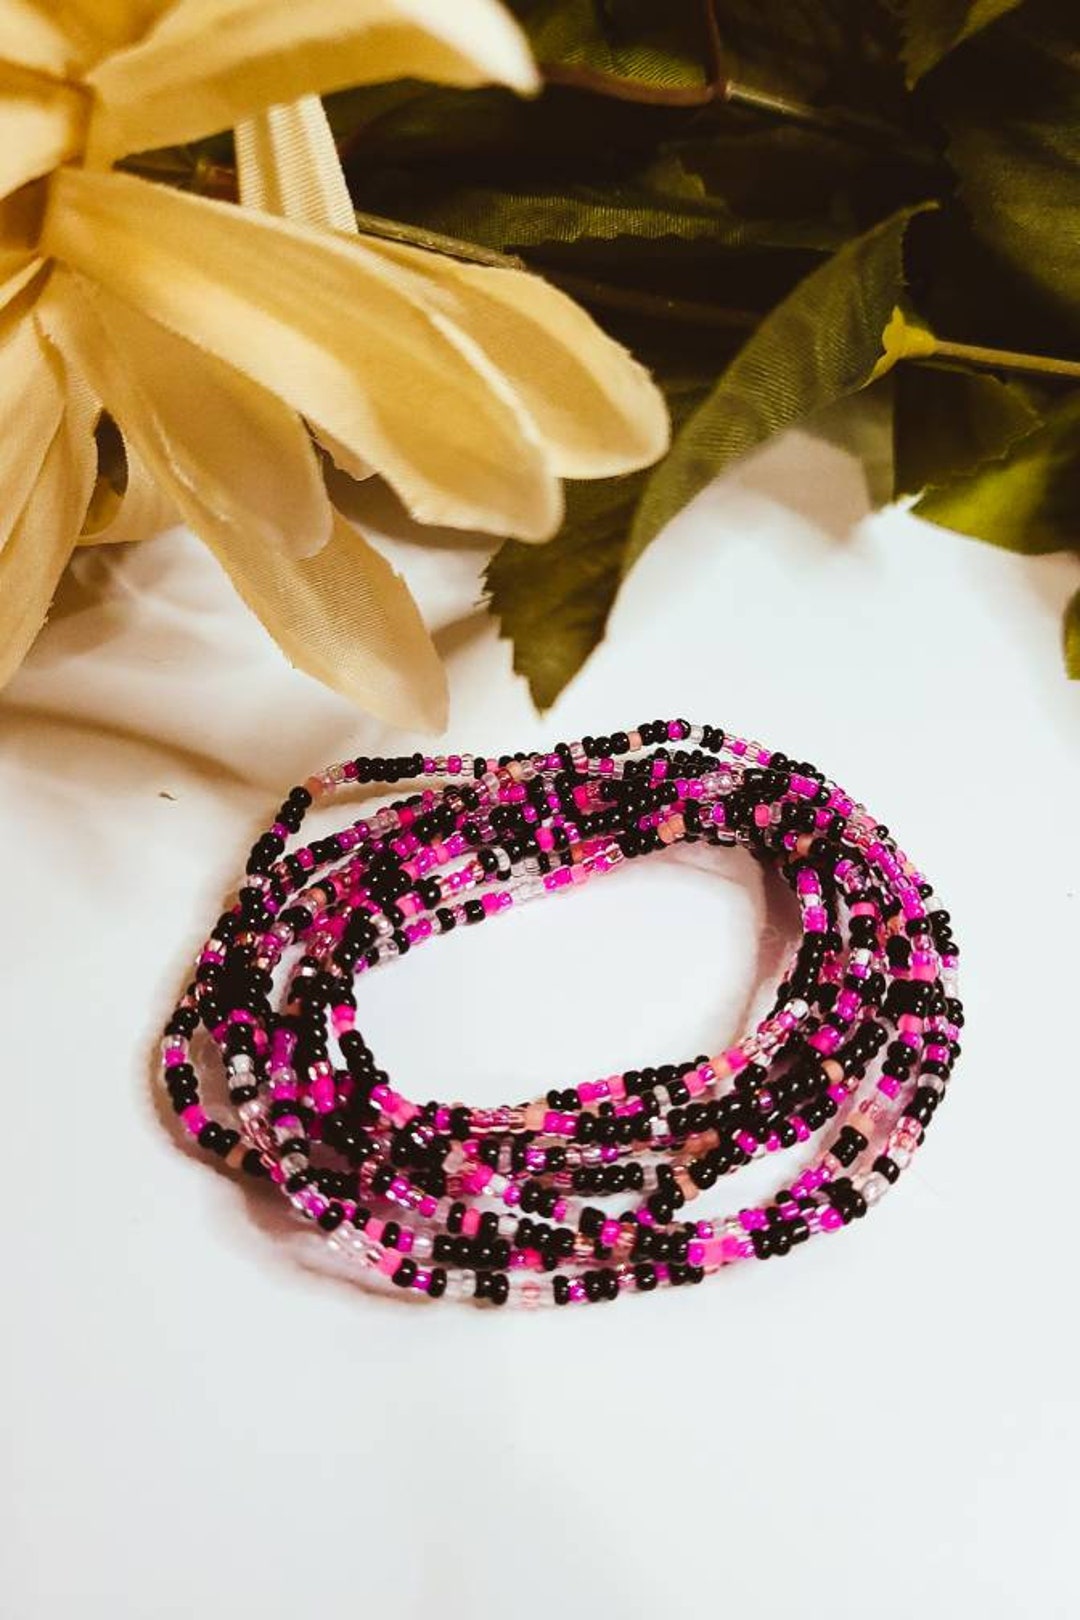 Confetti Seed Bead Bracelet Sets, Set of Ten, Multi Color, Stackable, Tiny Bead Bracelet, Beaded Bracelet, Handmade Jewelry